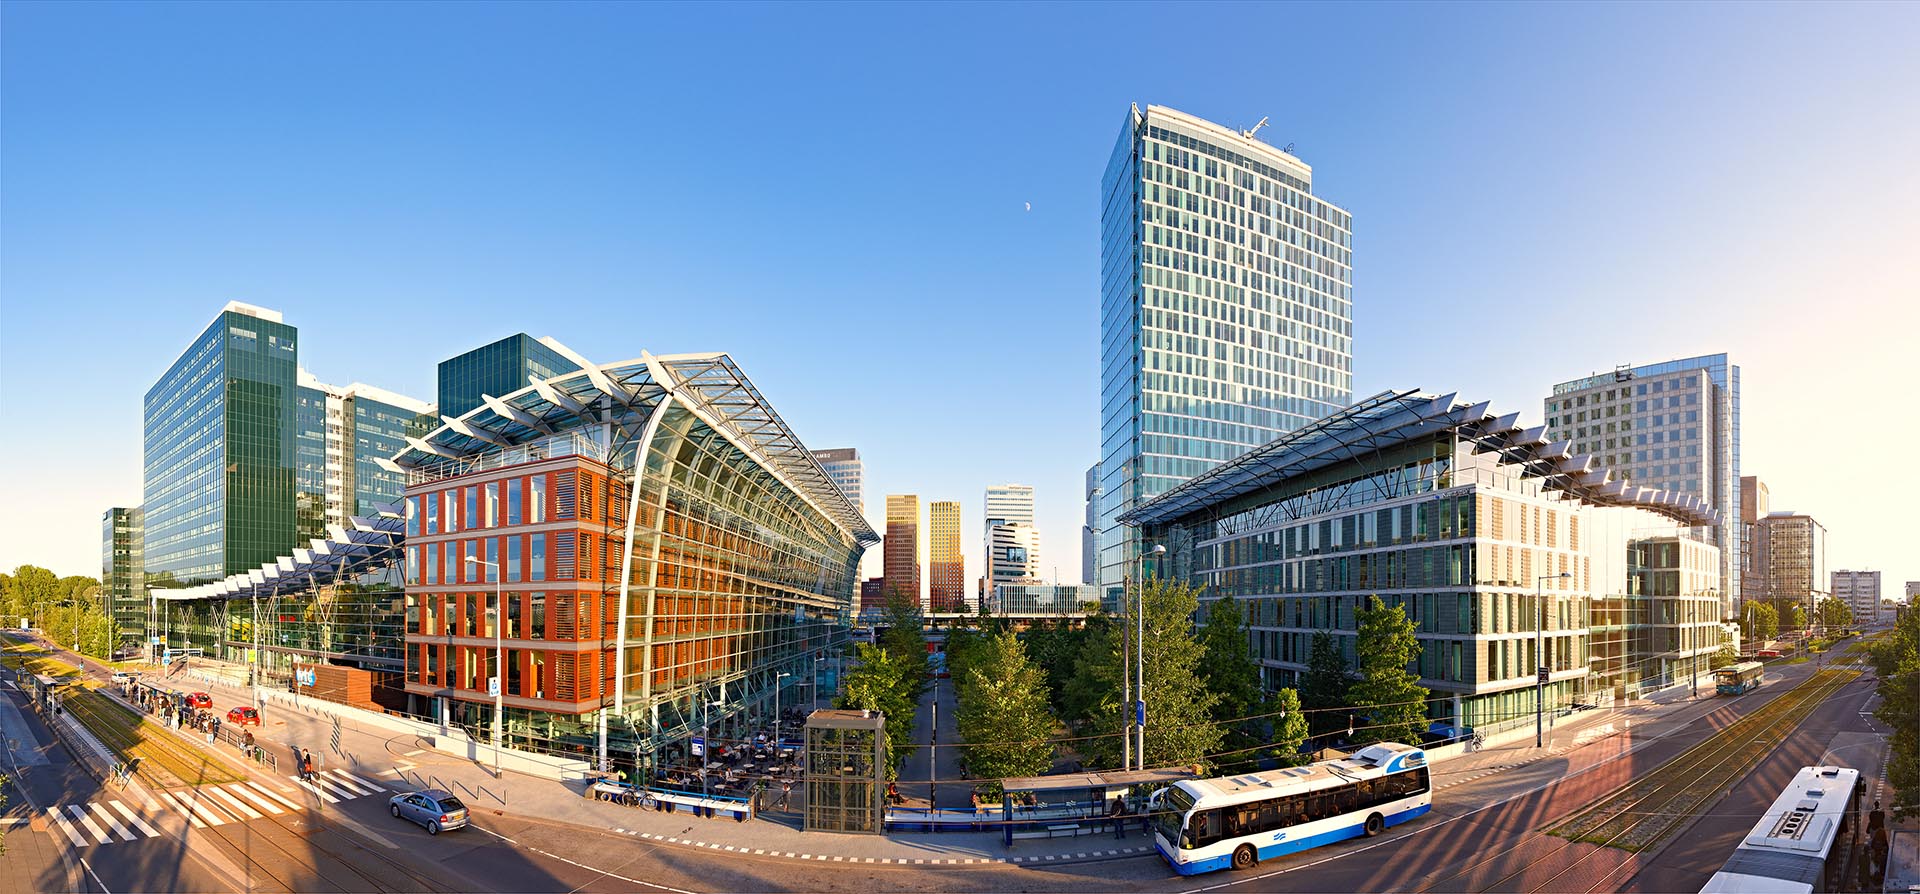 WTC gebouw in Amsterdam